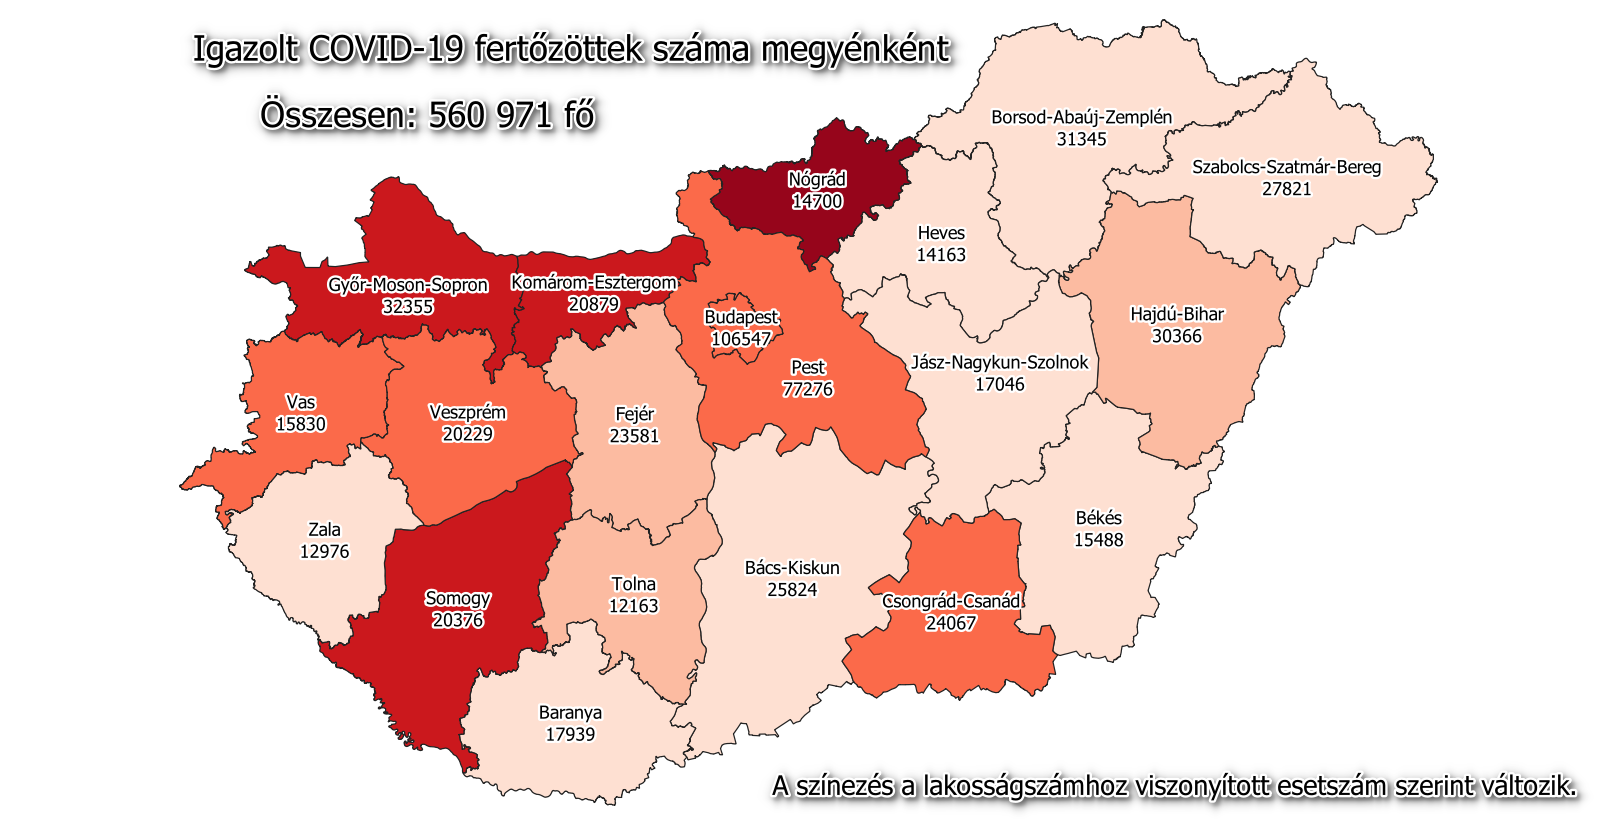 हंगरी कोरोनावायरस नक्शा